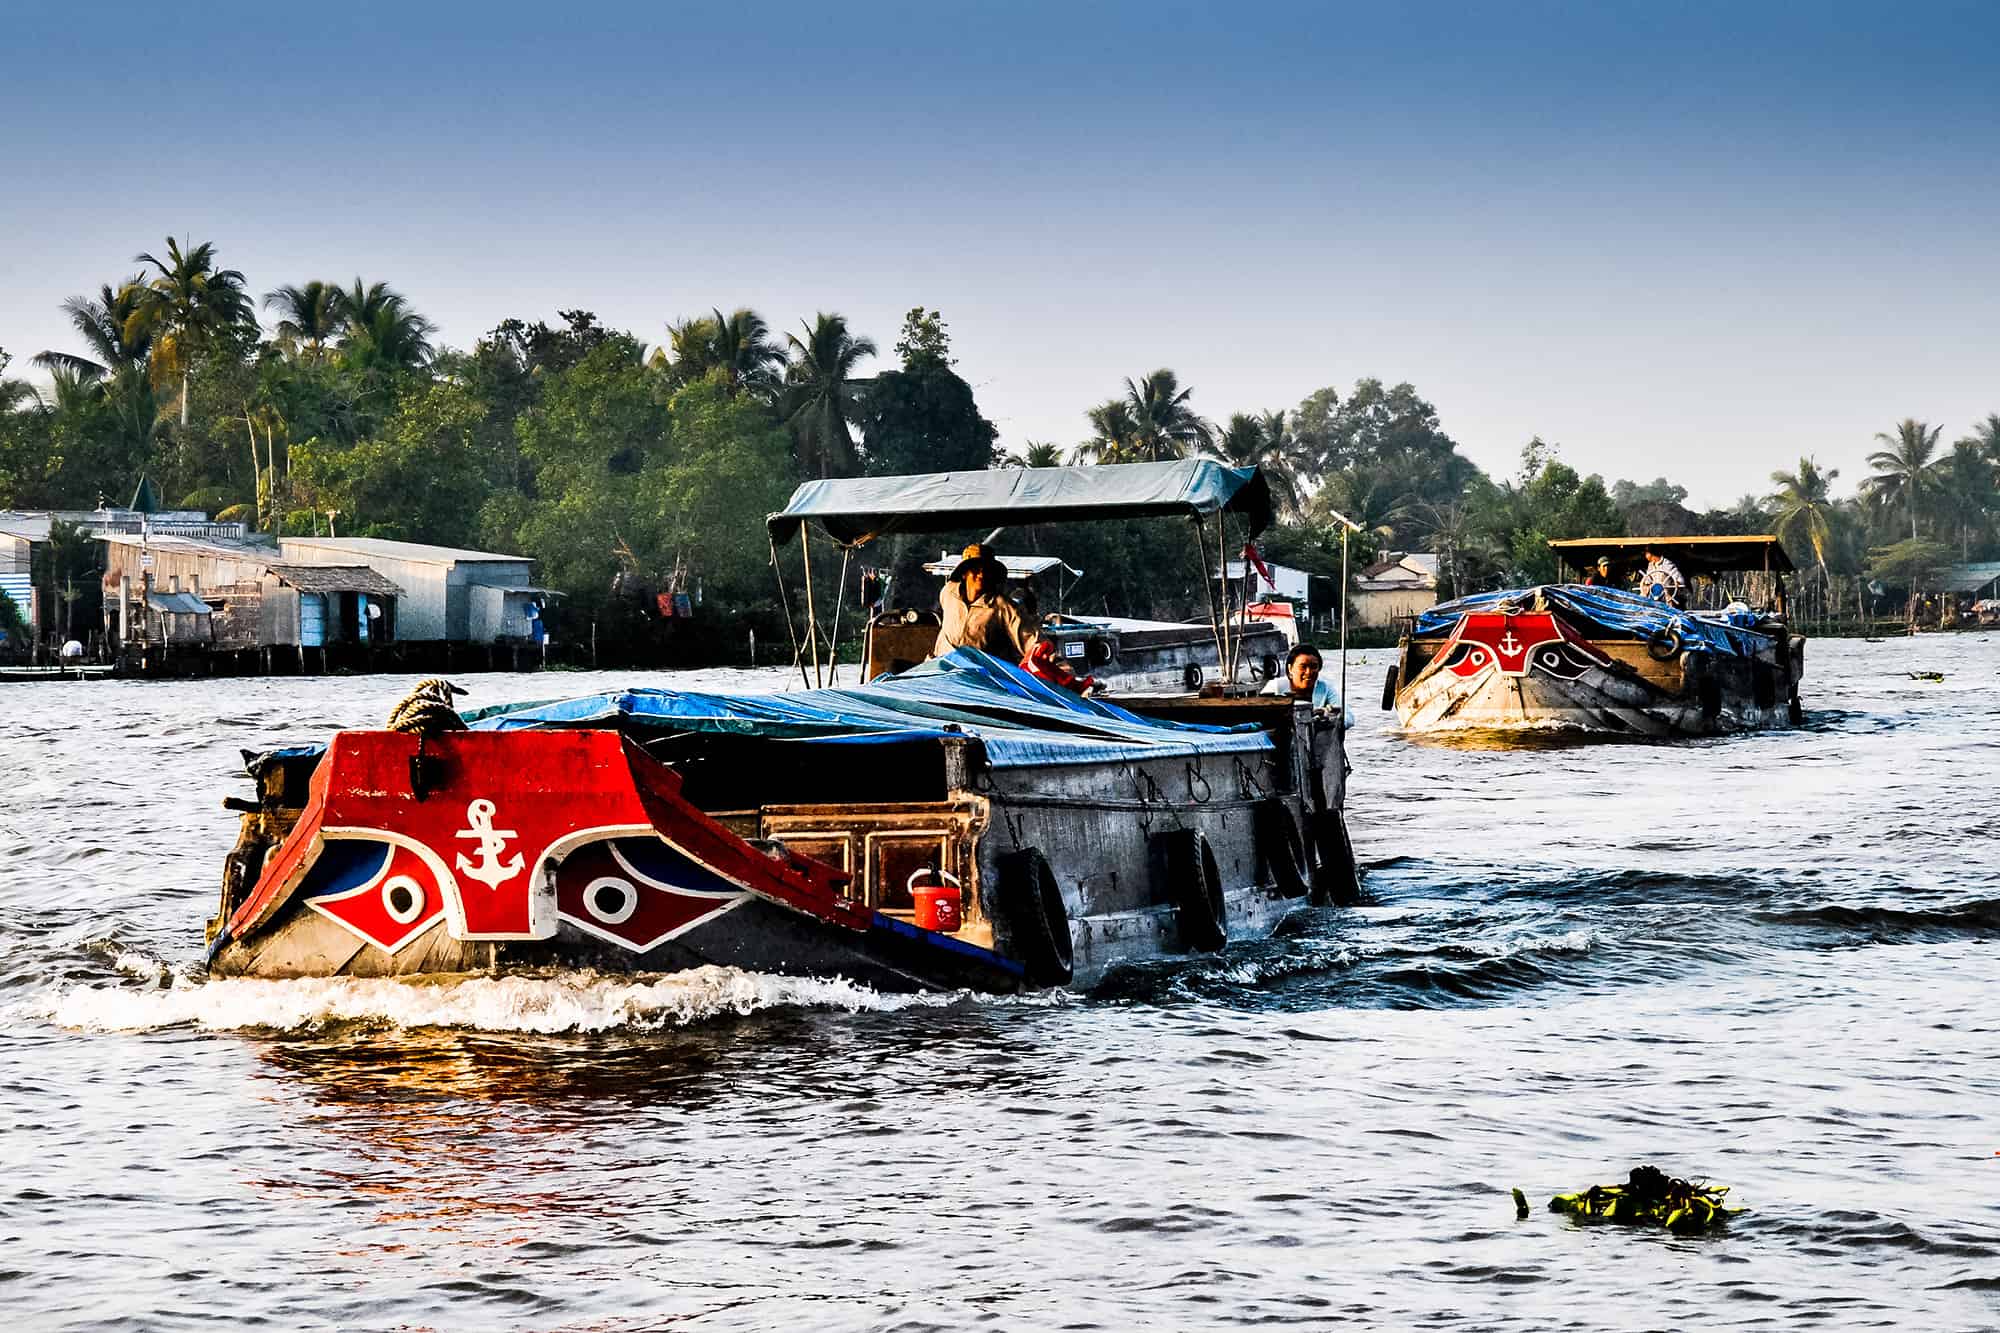 Mekong detla - Places to visit in Vietnam in January